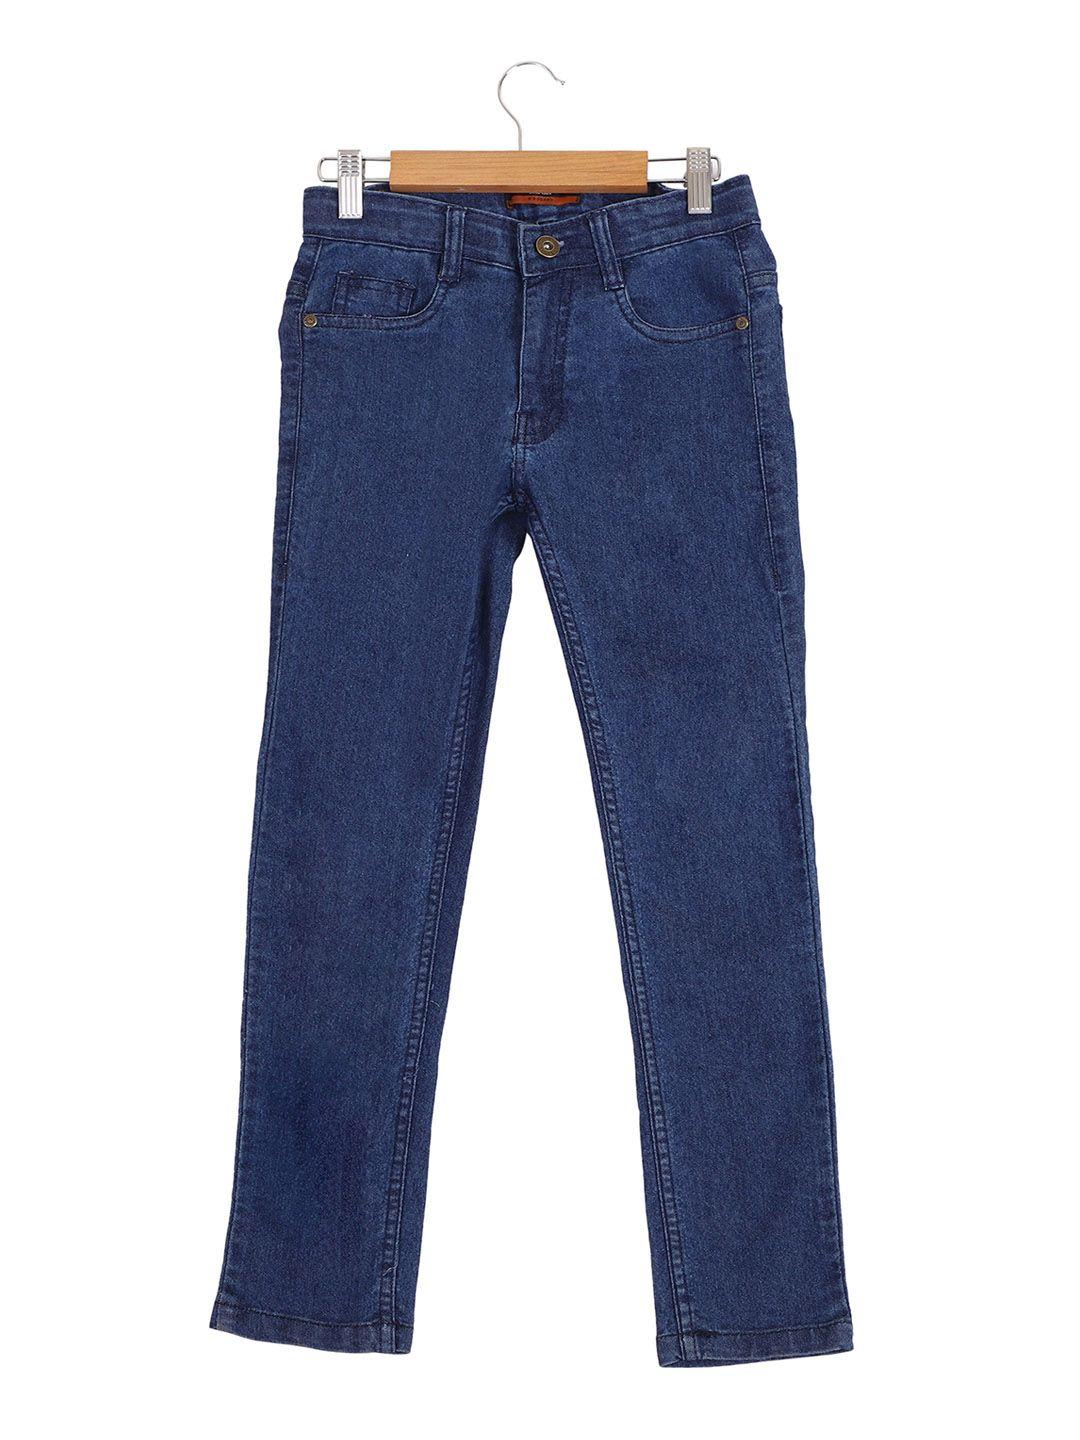 Killer Boys Comfort Mid-Rise Medium Shade Jeans